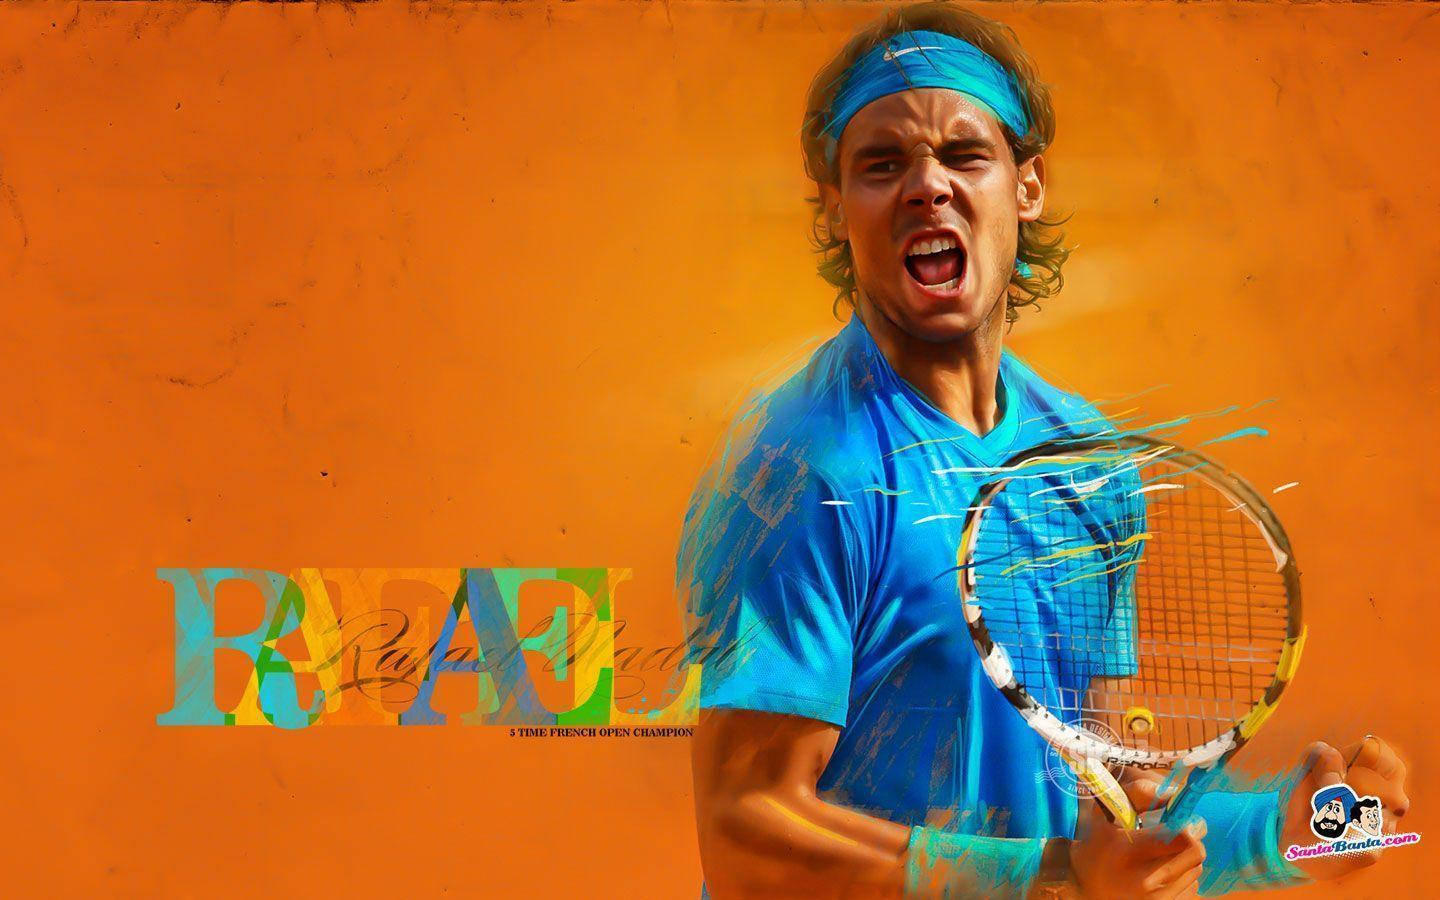 French Open Rafael Nadal Digital Art Wallpaper